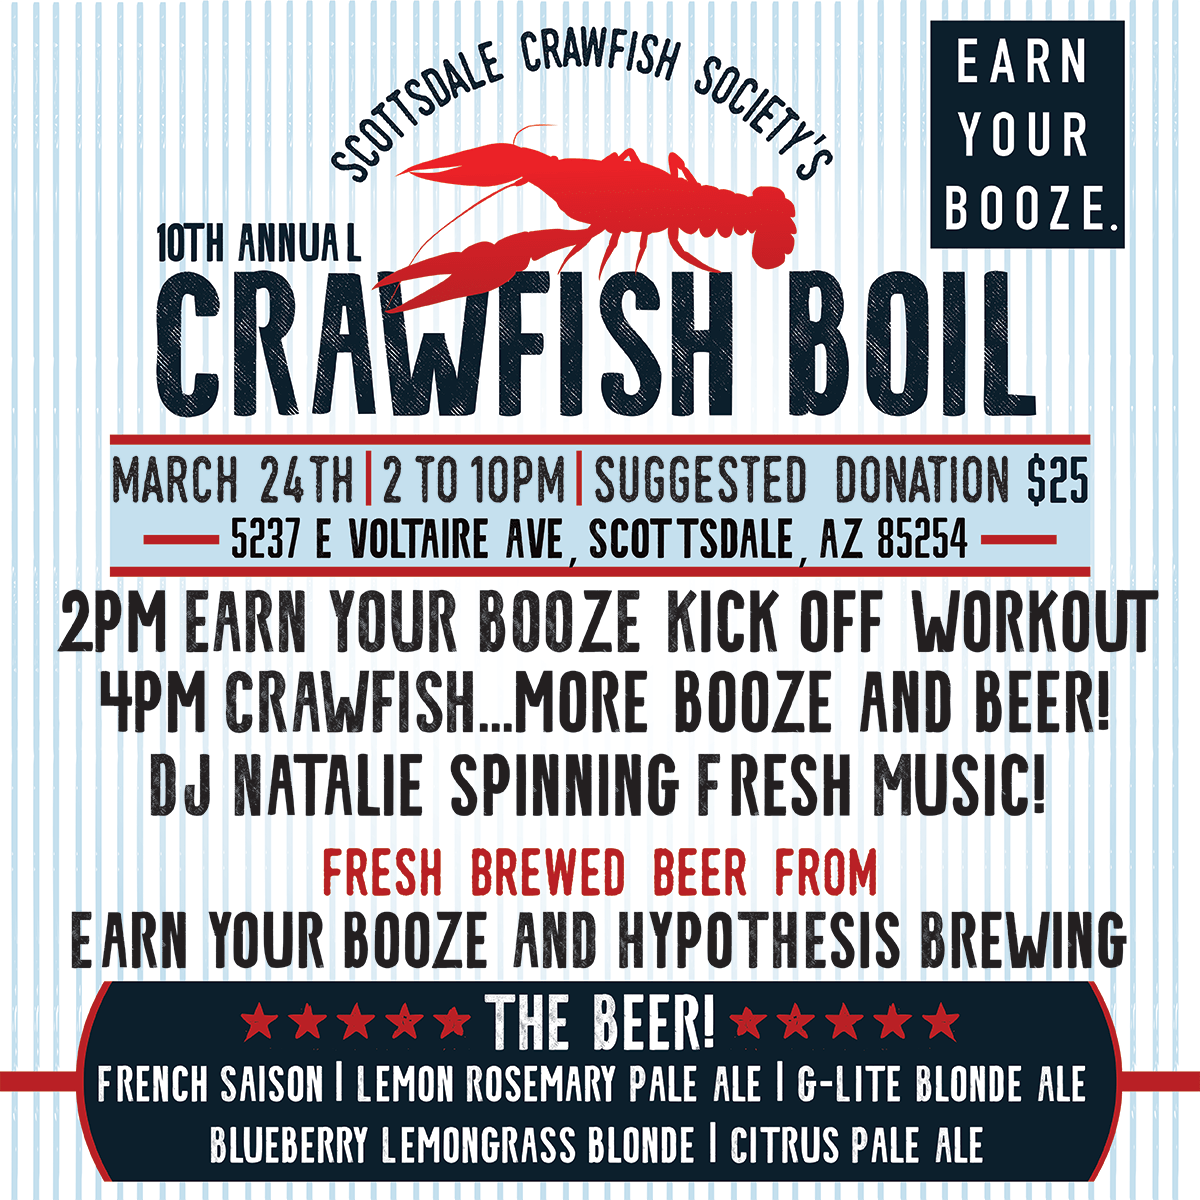 EARN YOUR SAKE | Charity Crawfish Boil (MAR 24)Earn Your Booze